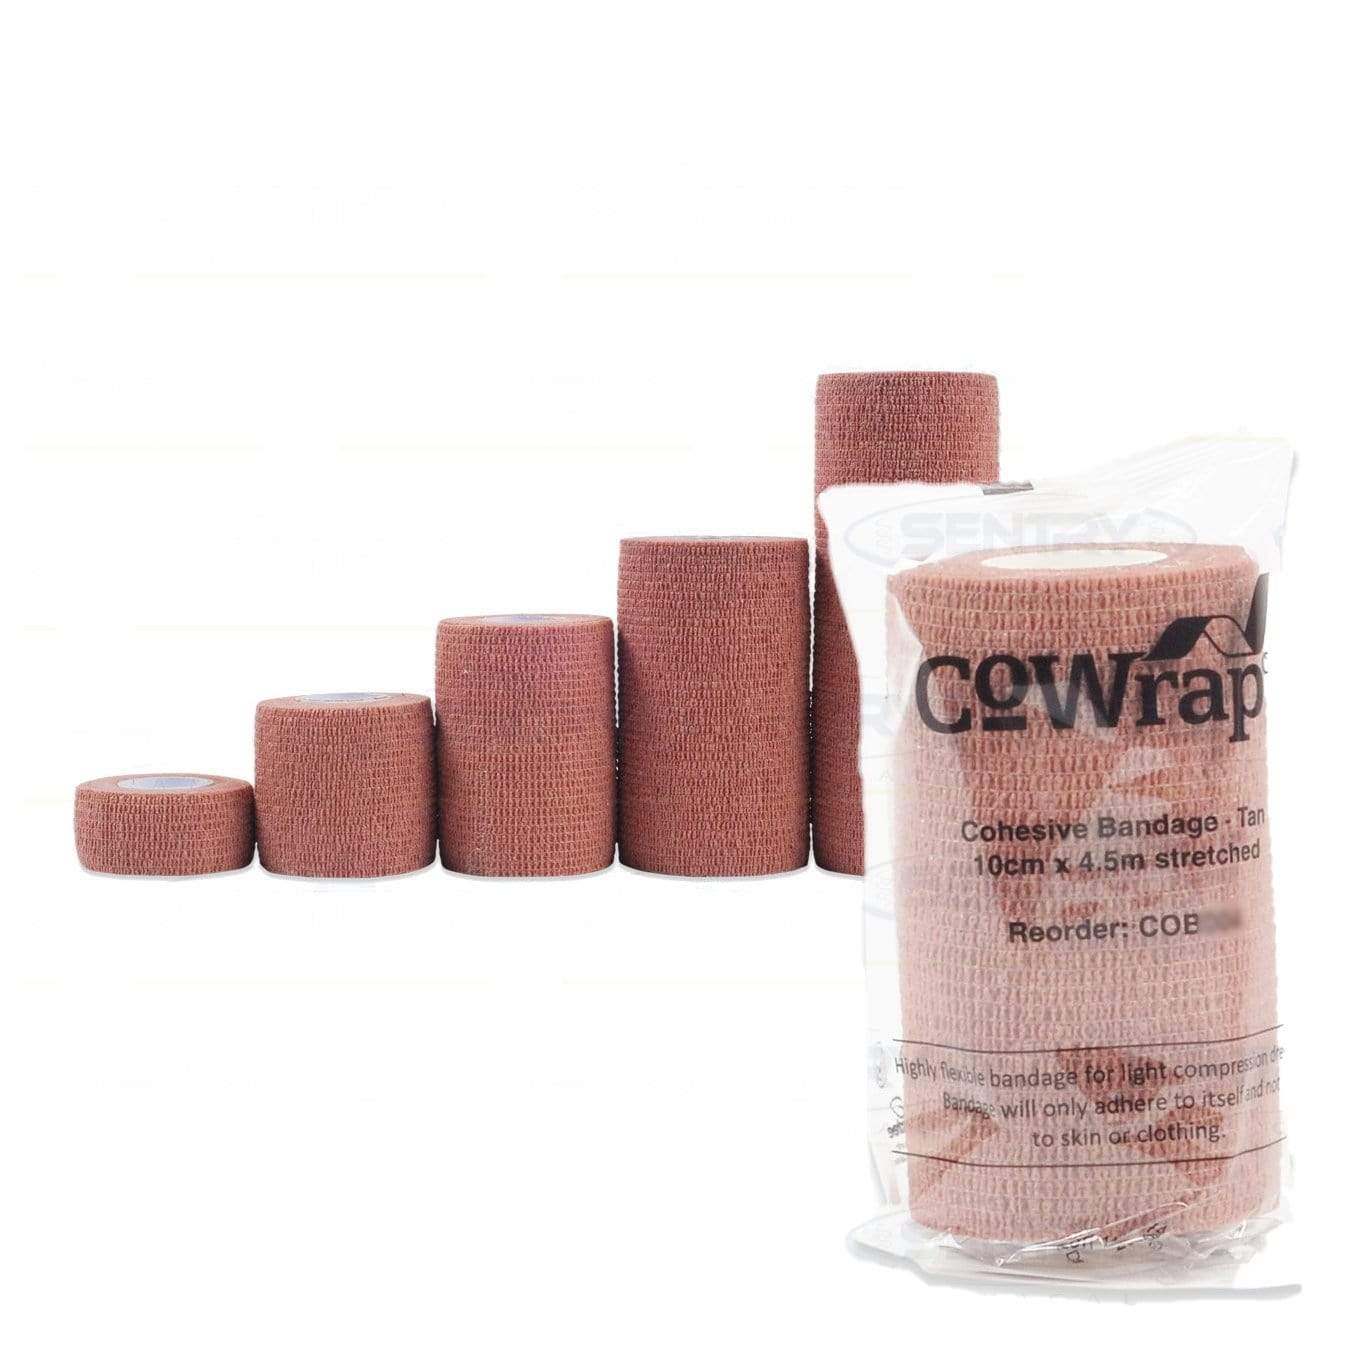 Sentry CoWrap Cohesive Bandage